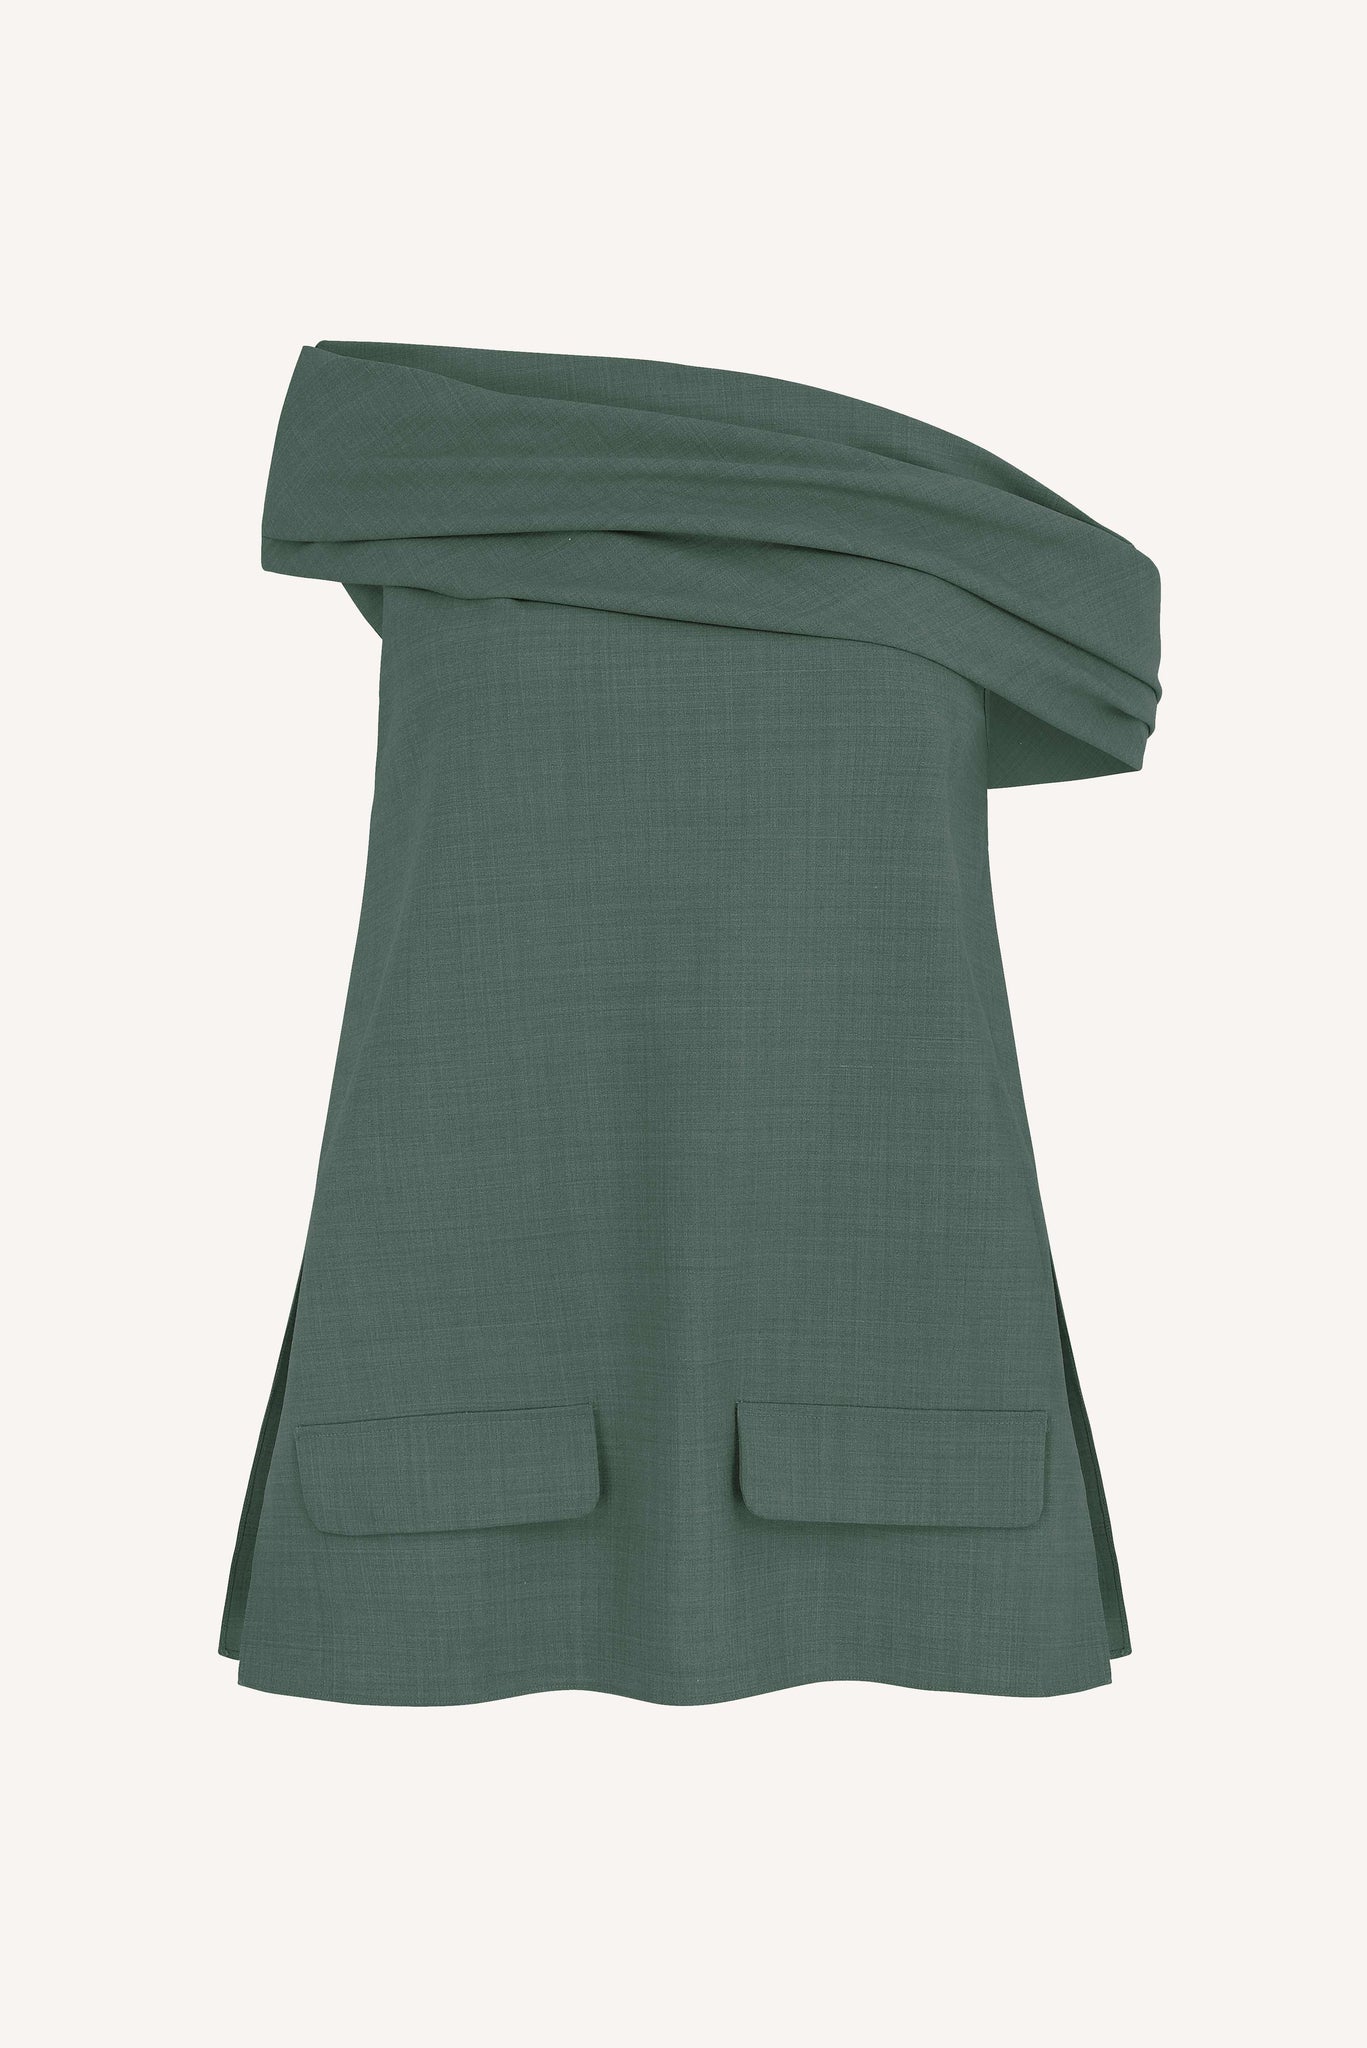 Arche Asymmetric Top in Khaki Summer Wool